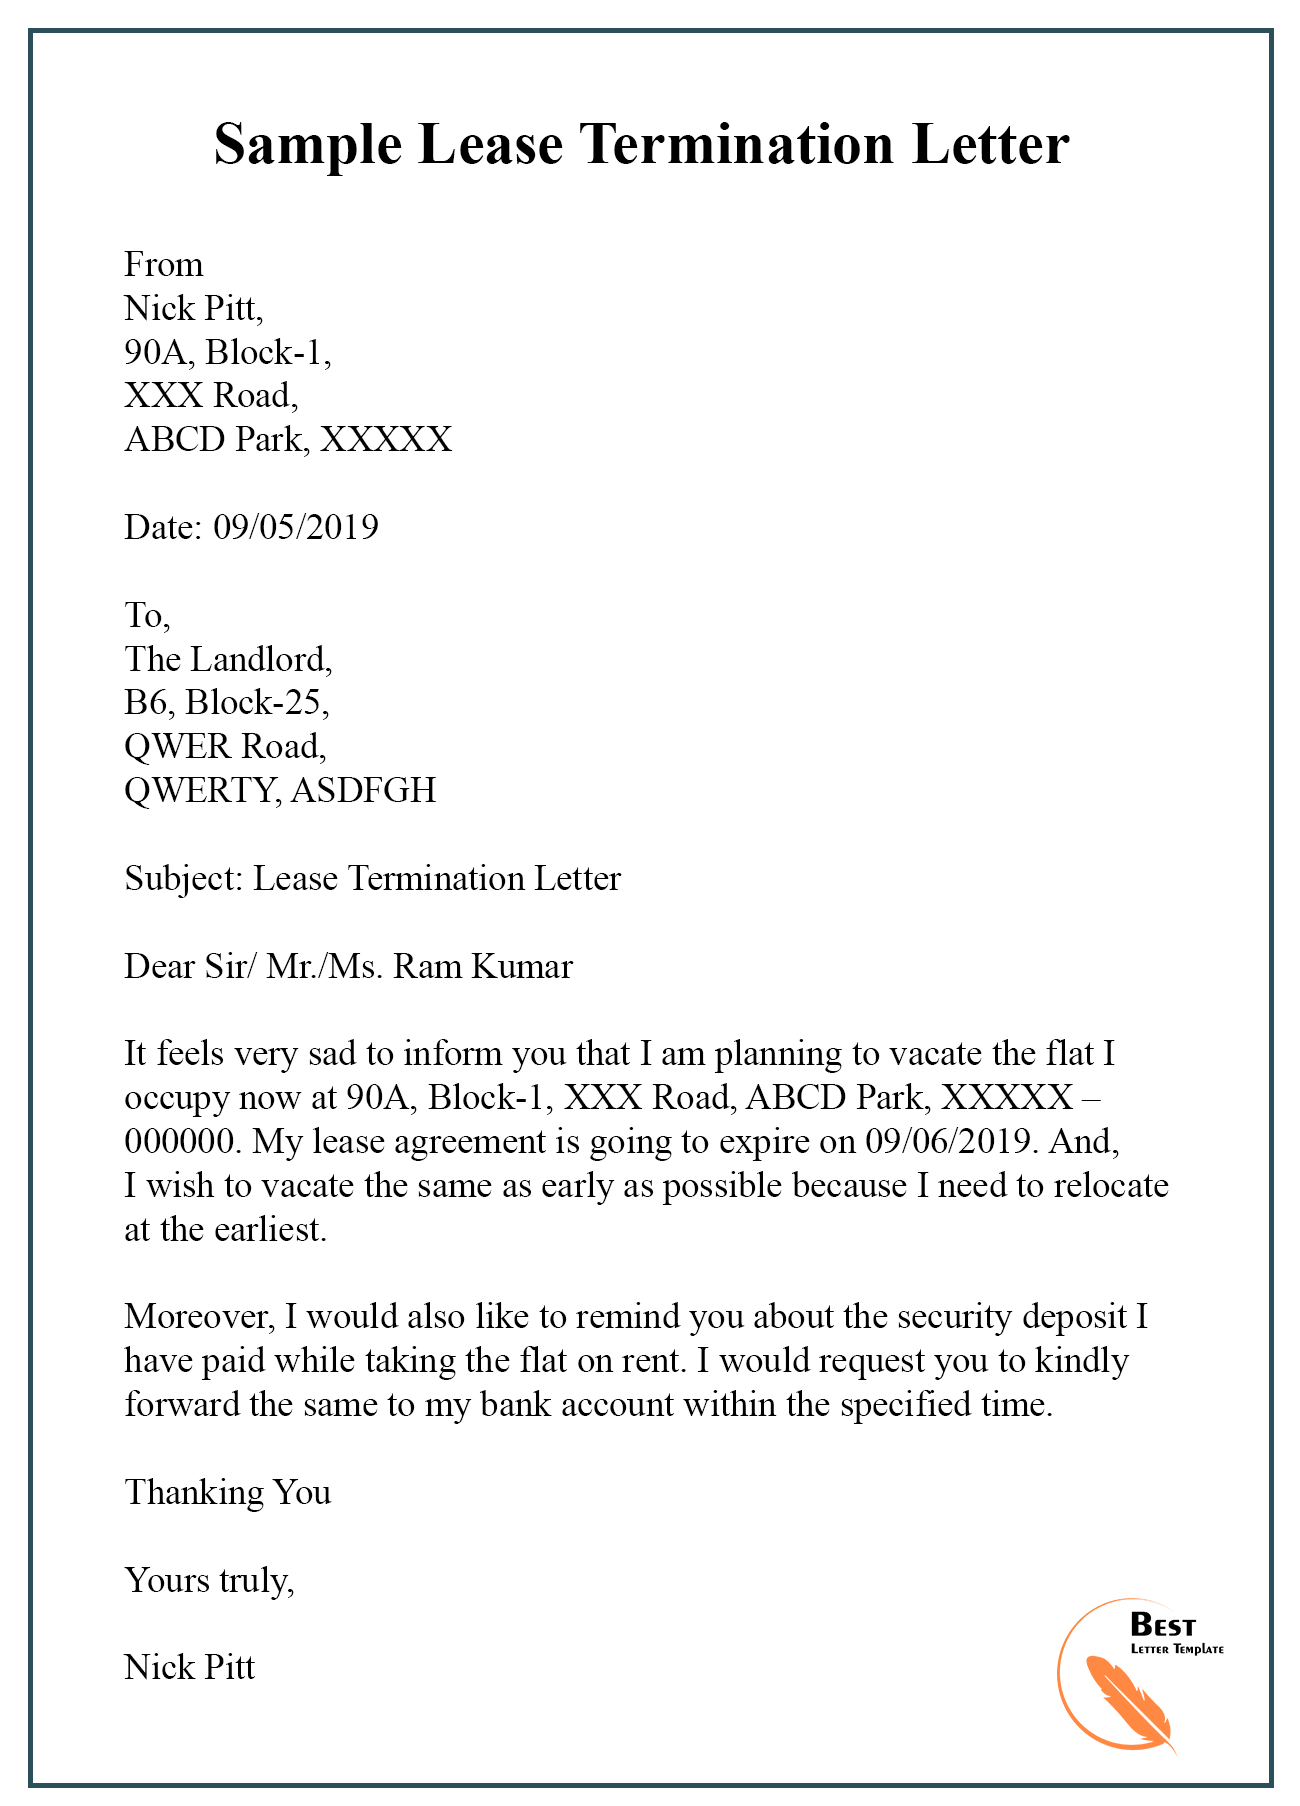 Sample Letter To Tenant From Landlord from bestlettertemplate.com